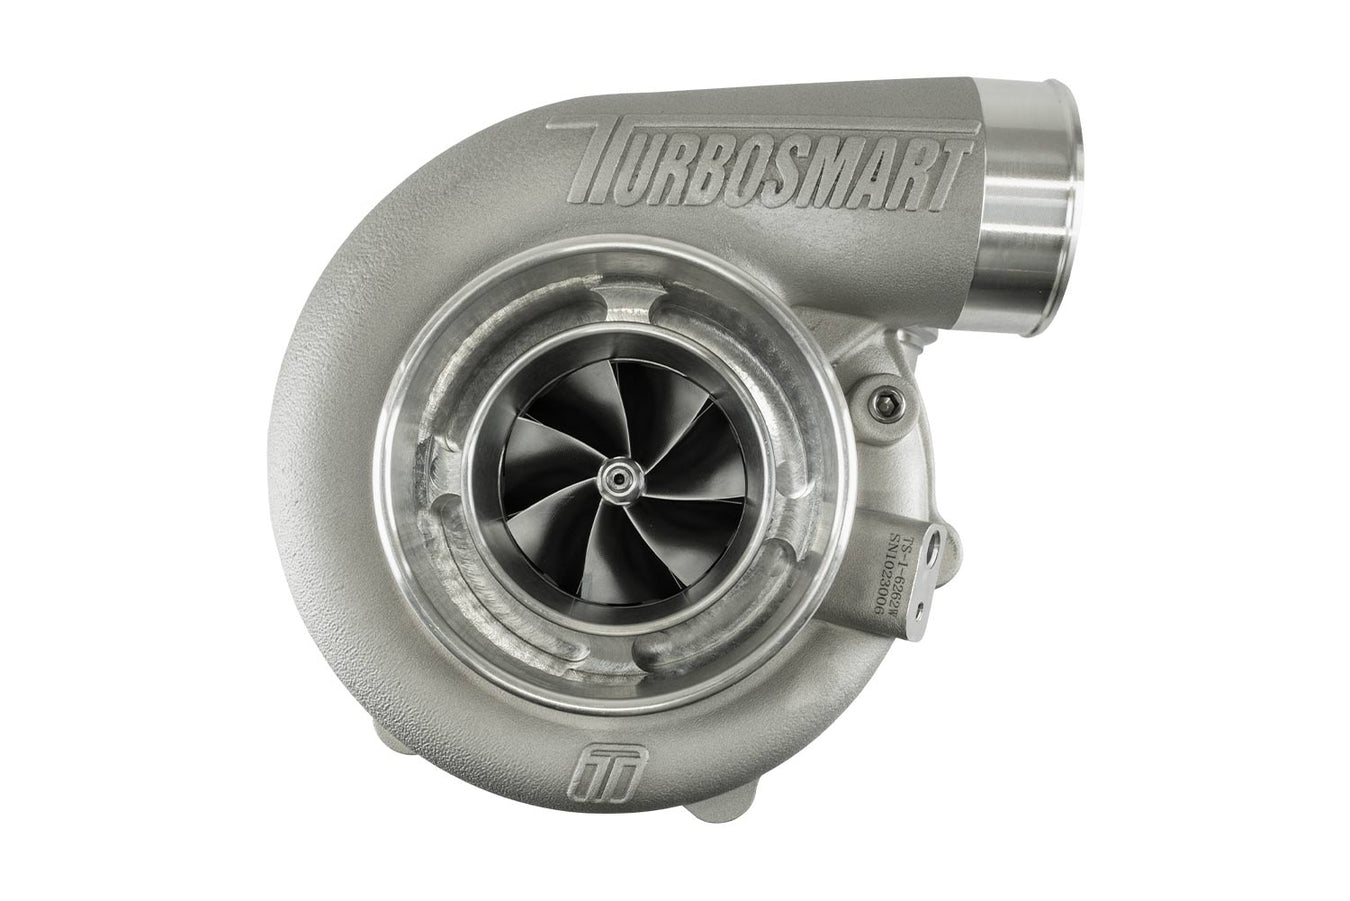 Turbosmart, BRA Renault/Mini, Turbo Accessories